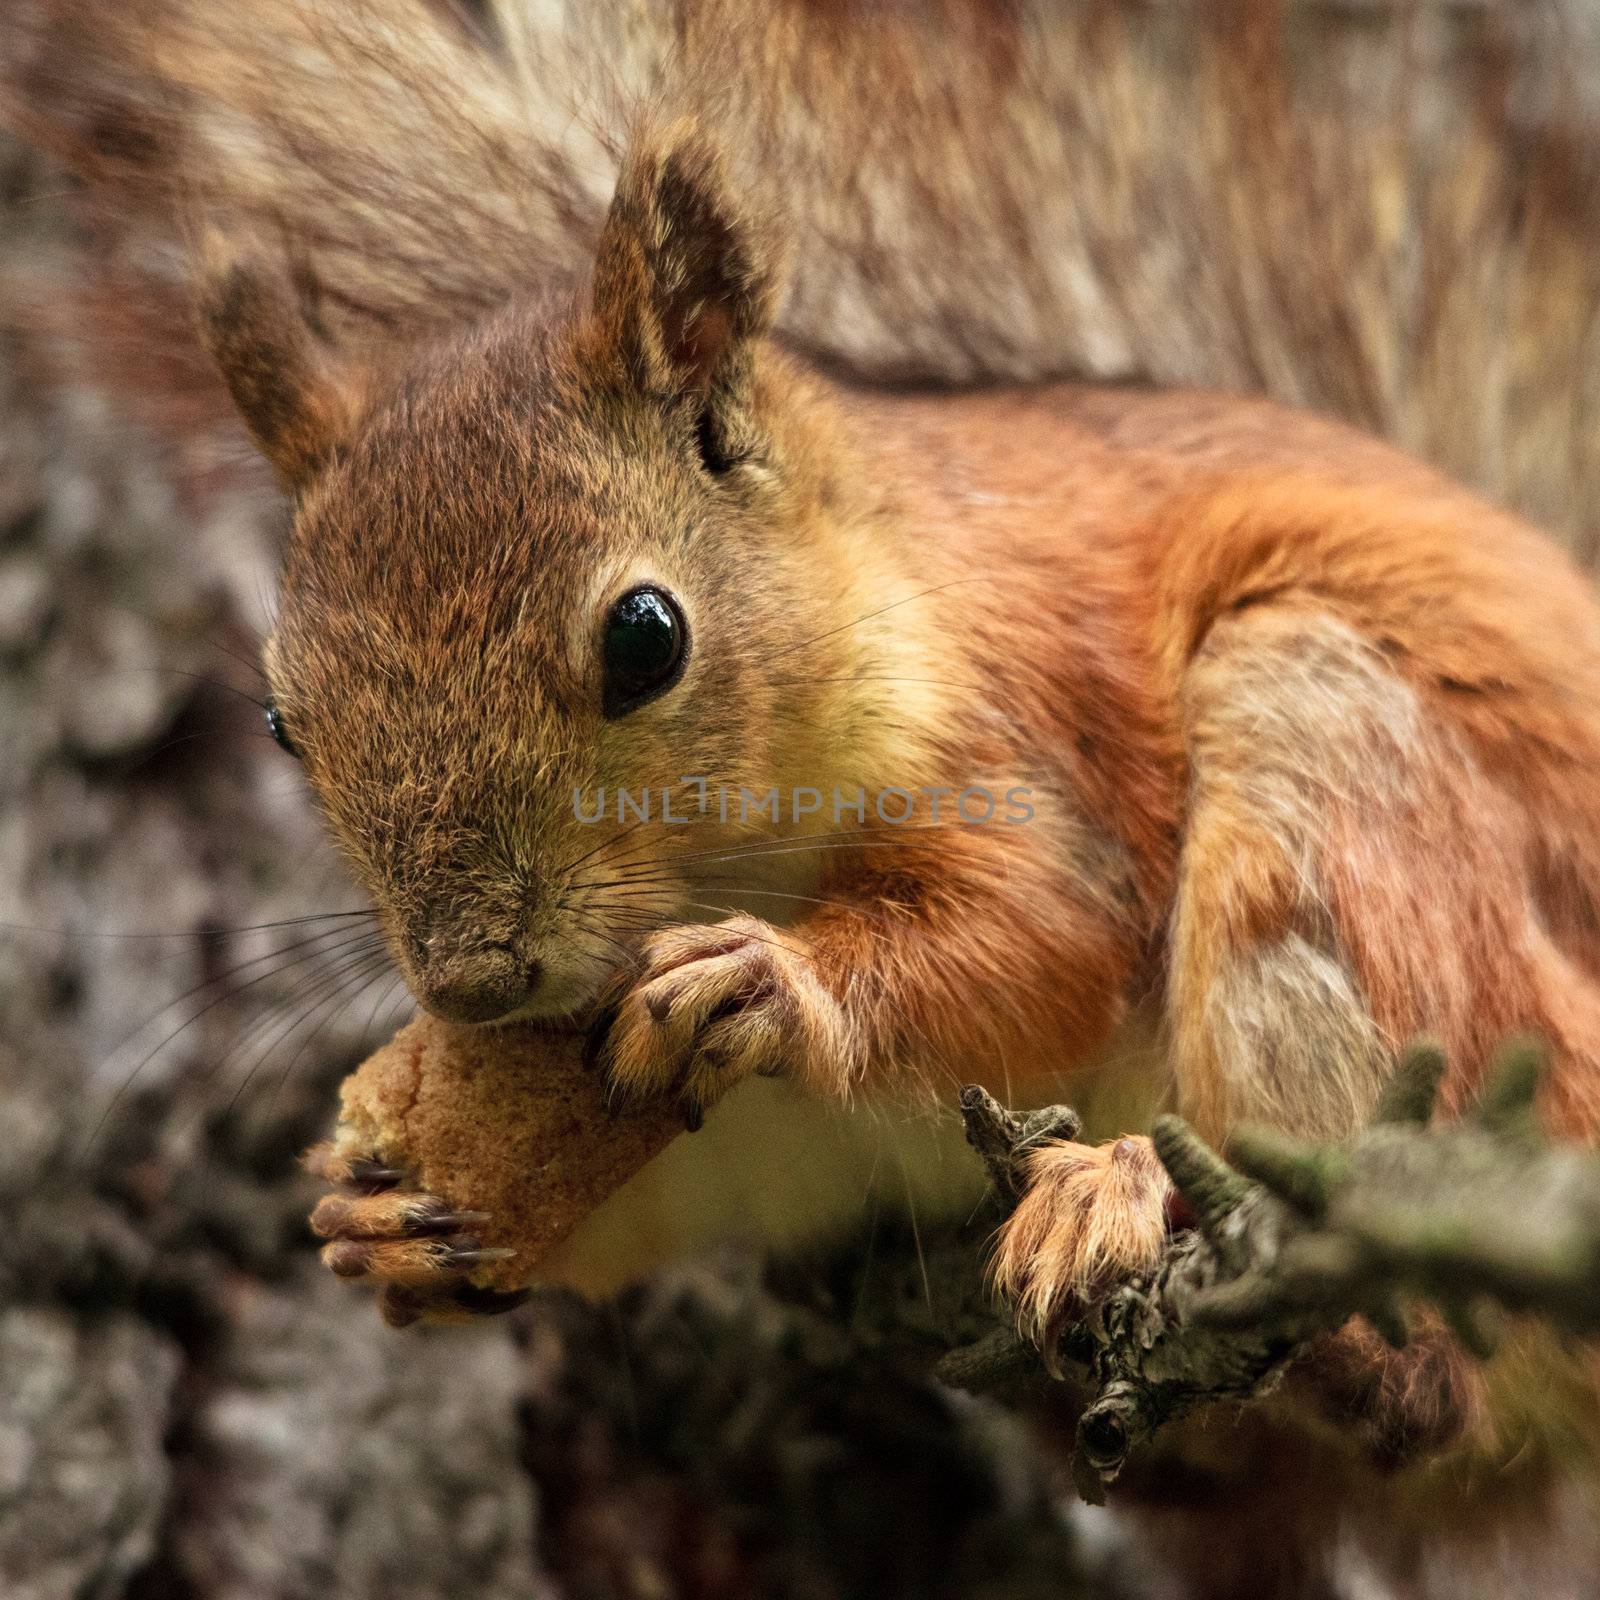 Squirrel with Bread Crust by petr_malyshev